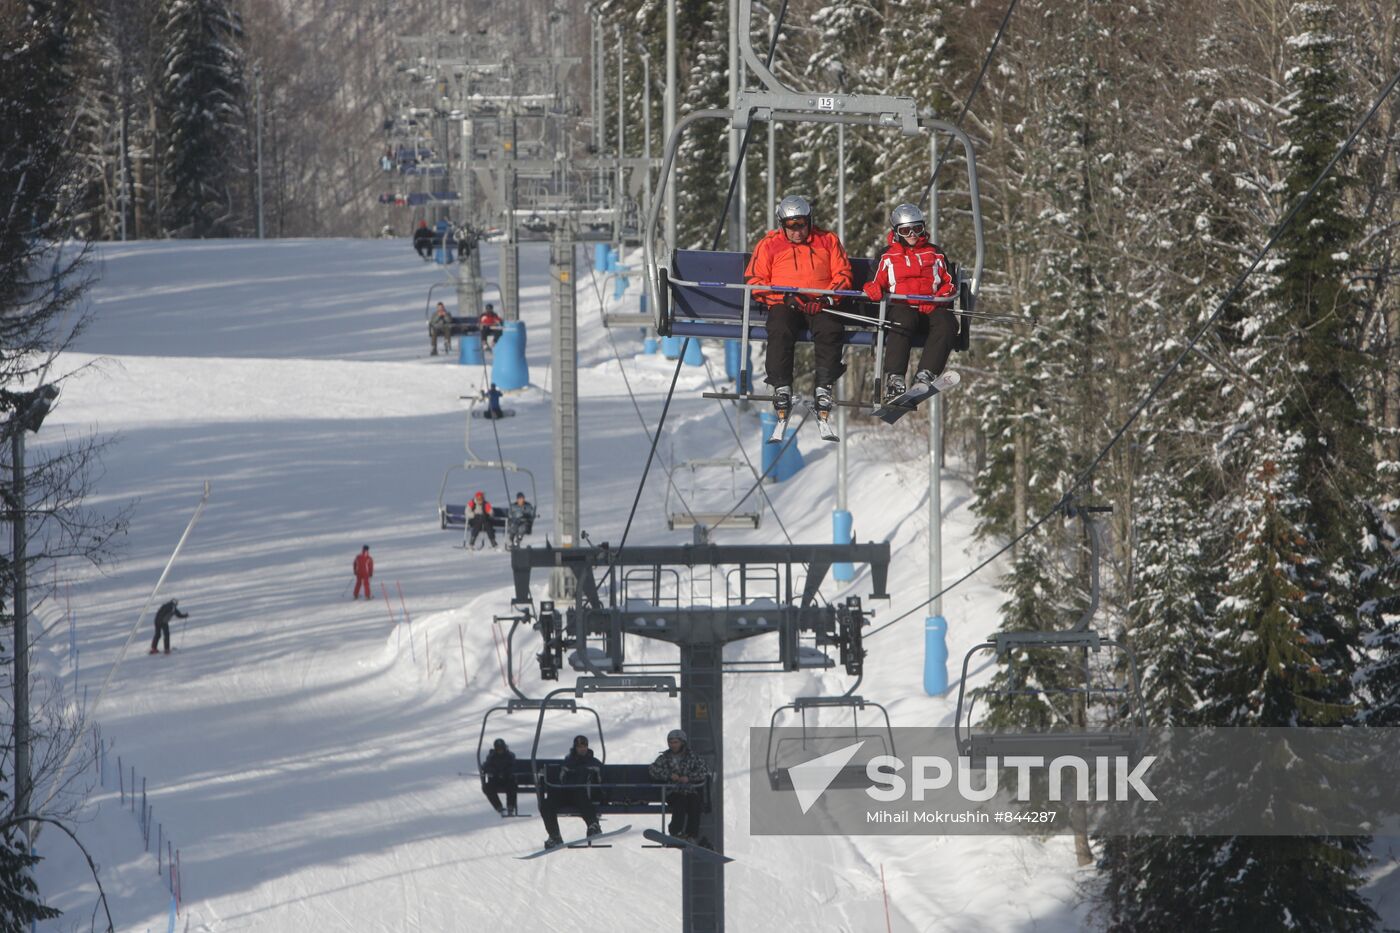 Gazprom Alpine Skiing and Leisure Center